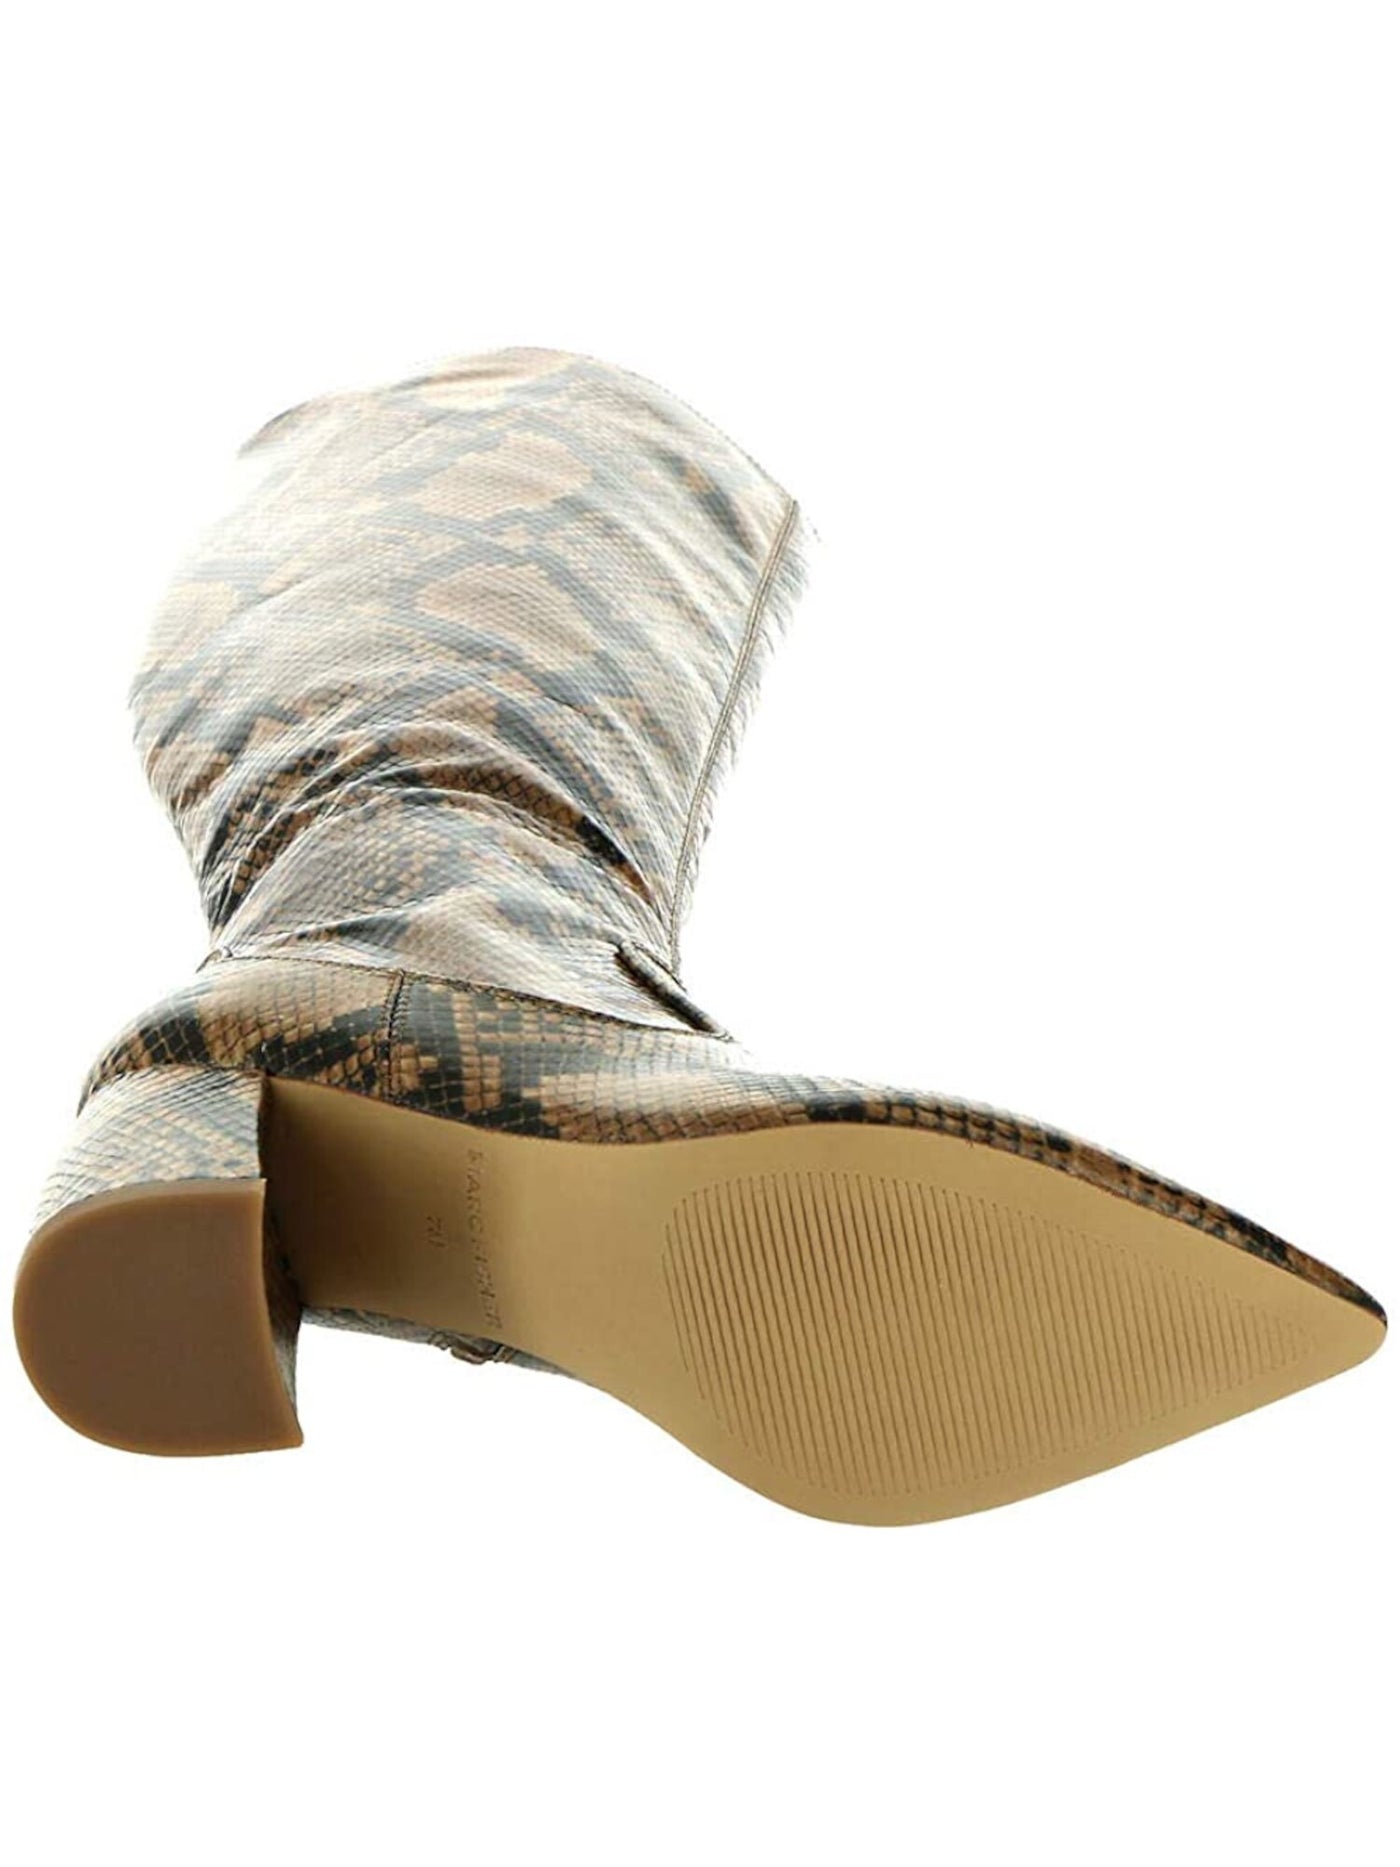 MARC FISHER Womens Brown Snakeskin Padded Comfort Retie Pointed Toe Block Heel Zip-Up Boots Shoes M